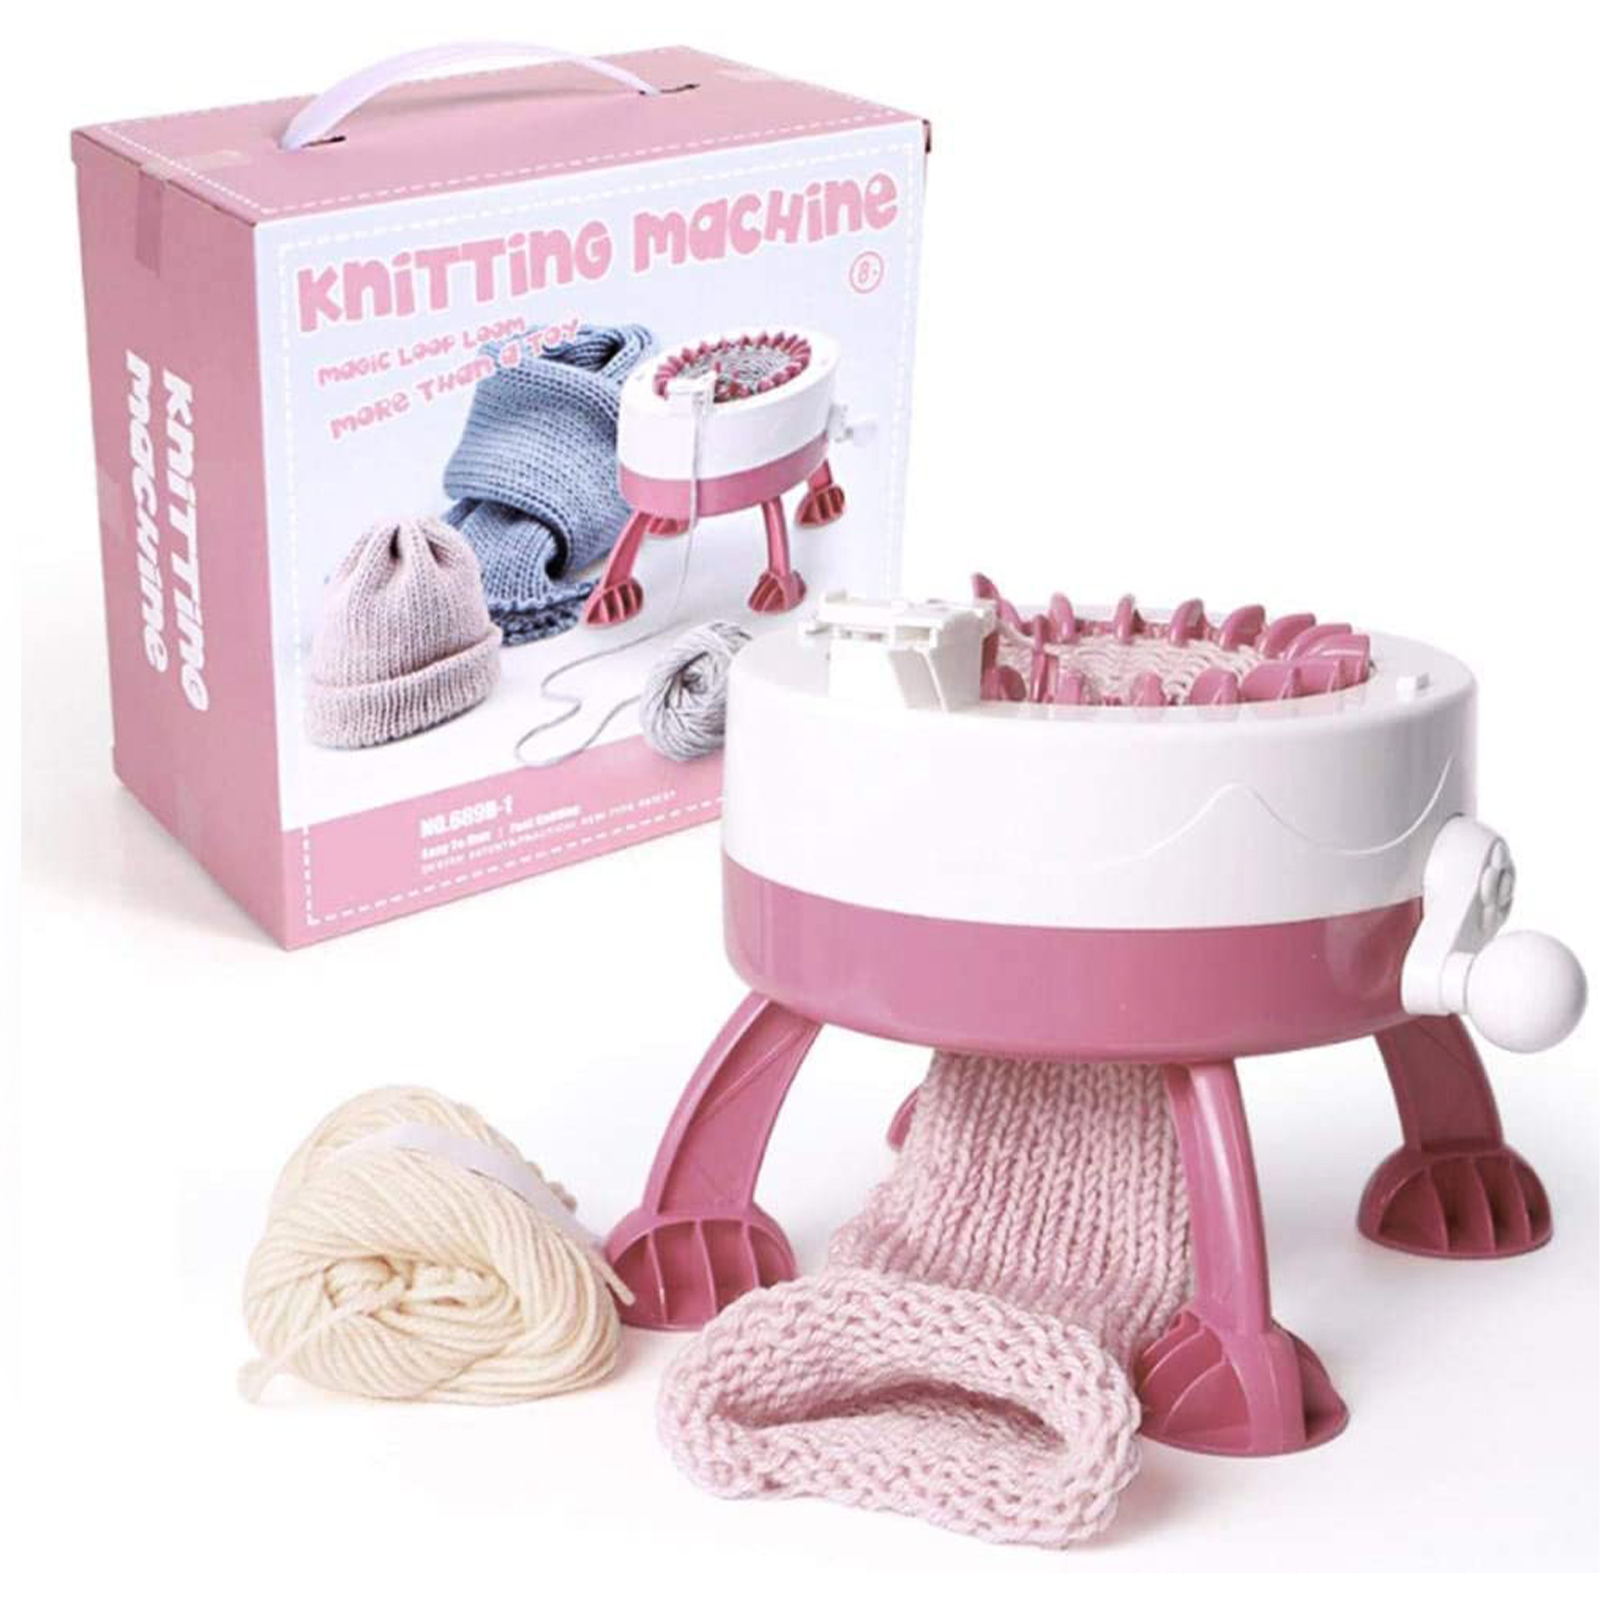 22 Needle Knitting Machine Sewing Material Accessories Loom Needlework Kit Tools Circular To knit Weaving DIY Threader